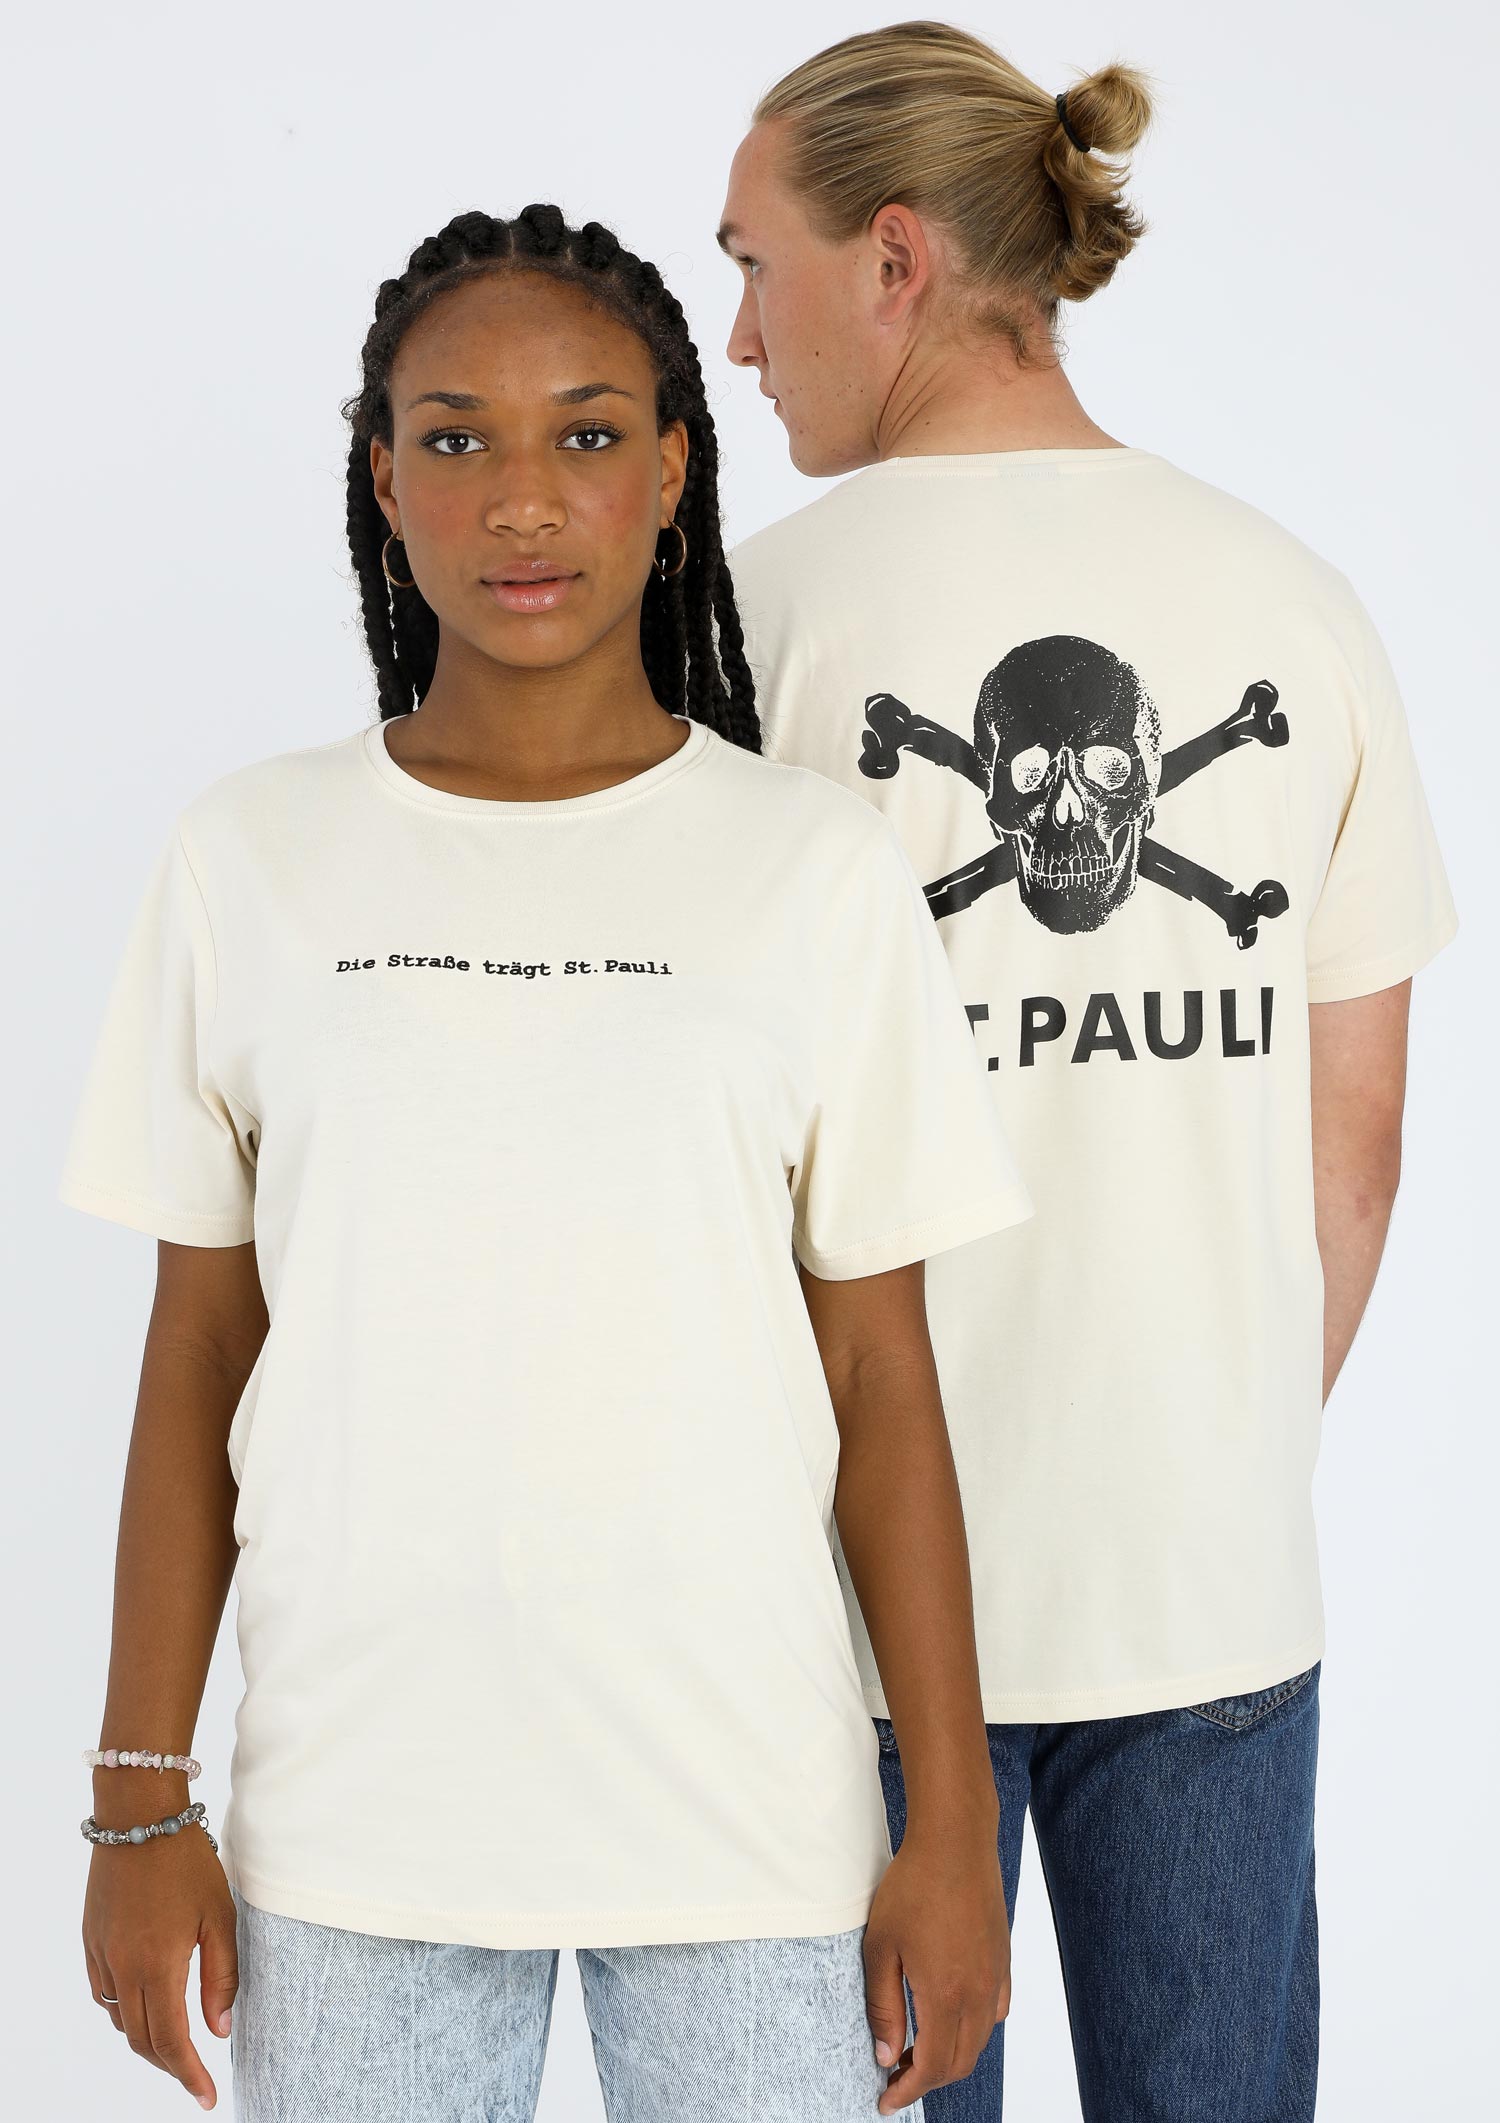 T-Shirt "Die Straße trägt St. Pauli"